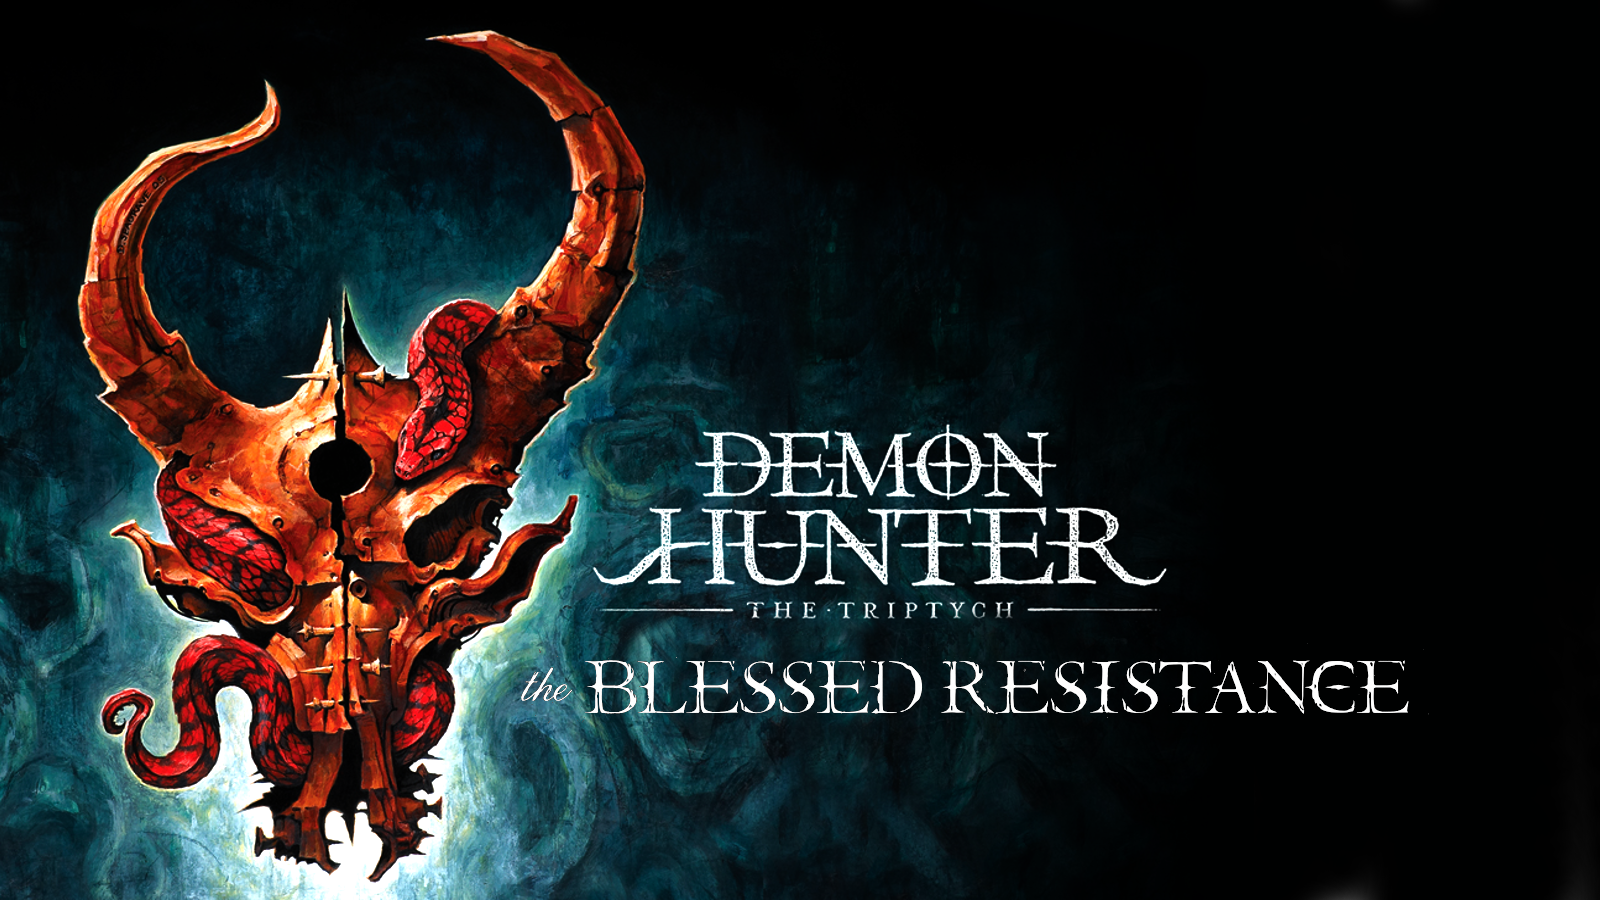 Demon Hunter Wallpaper by Blx777 on